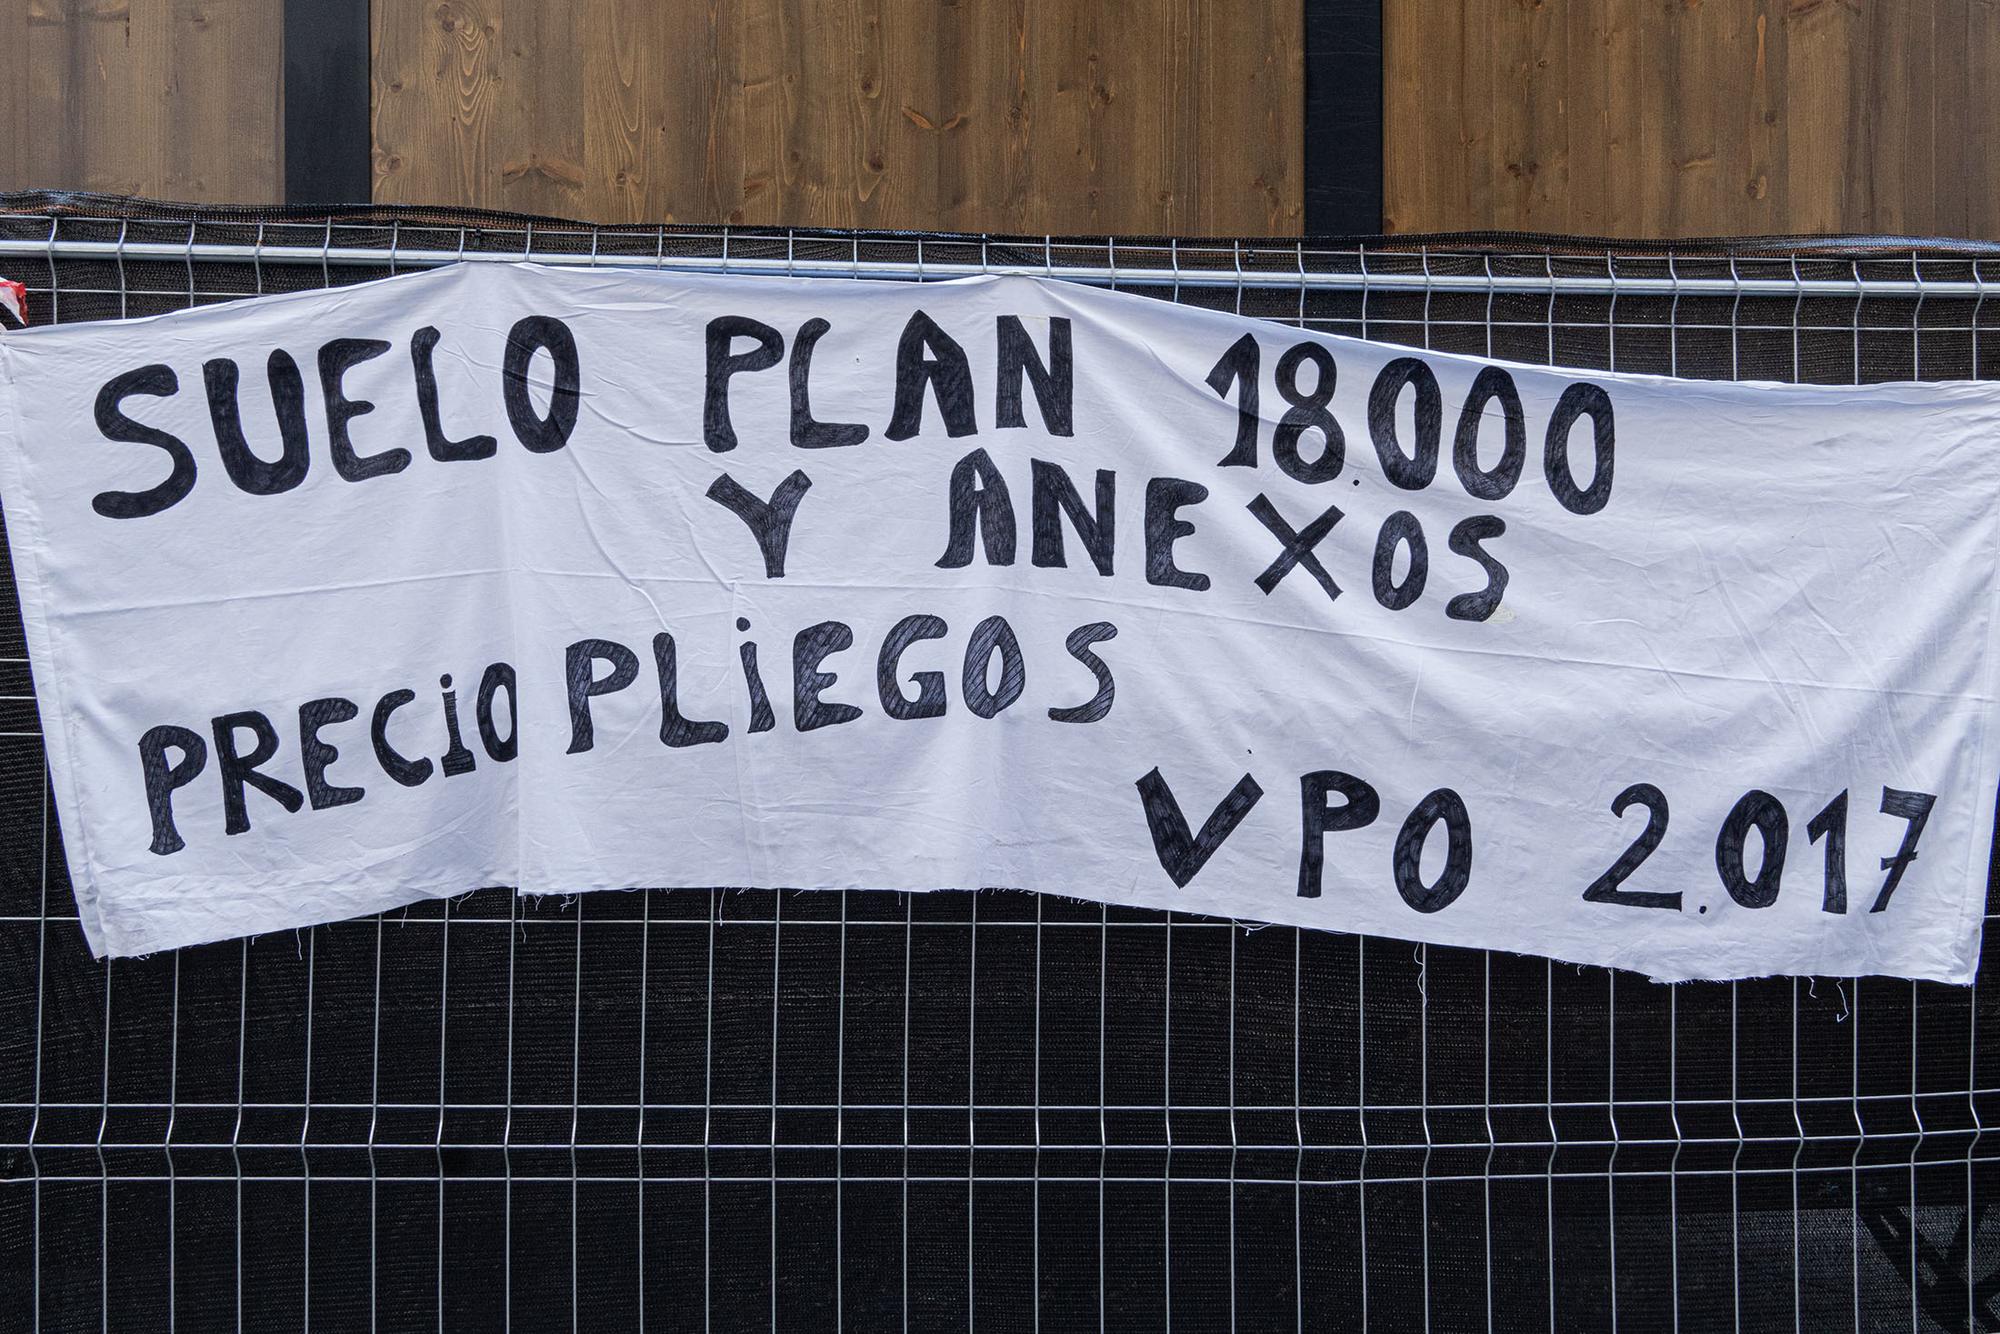 Plan 18000 Madrid - 1